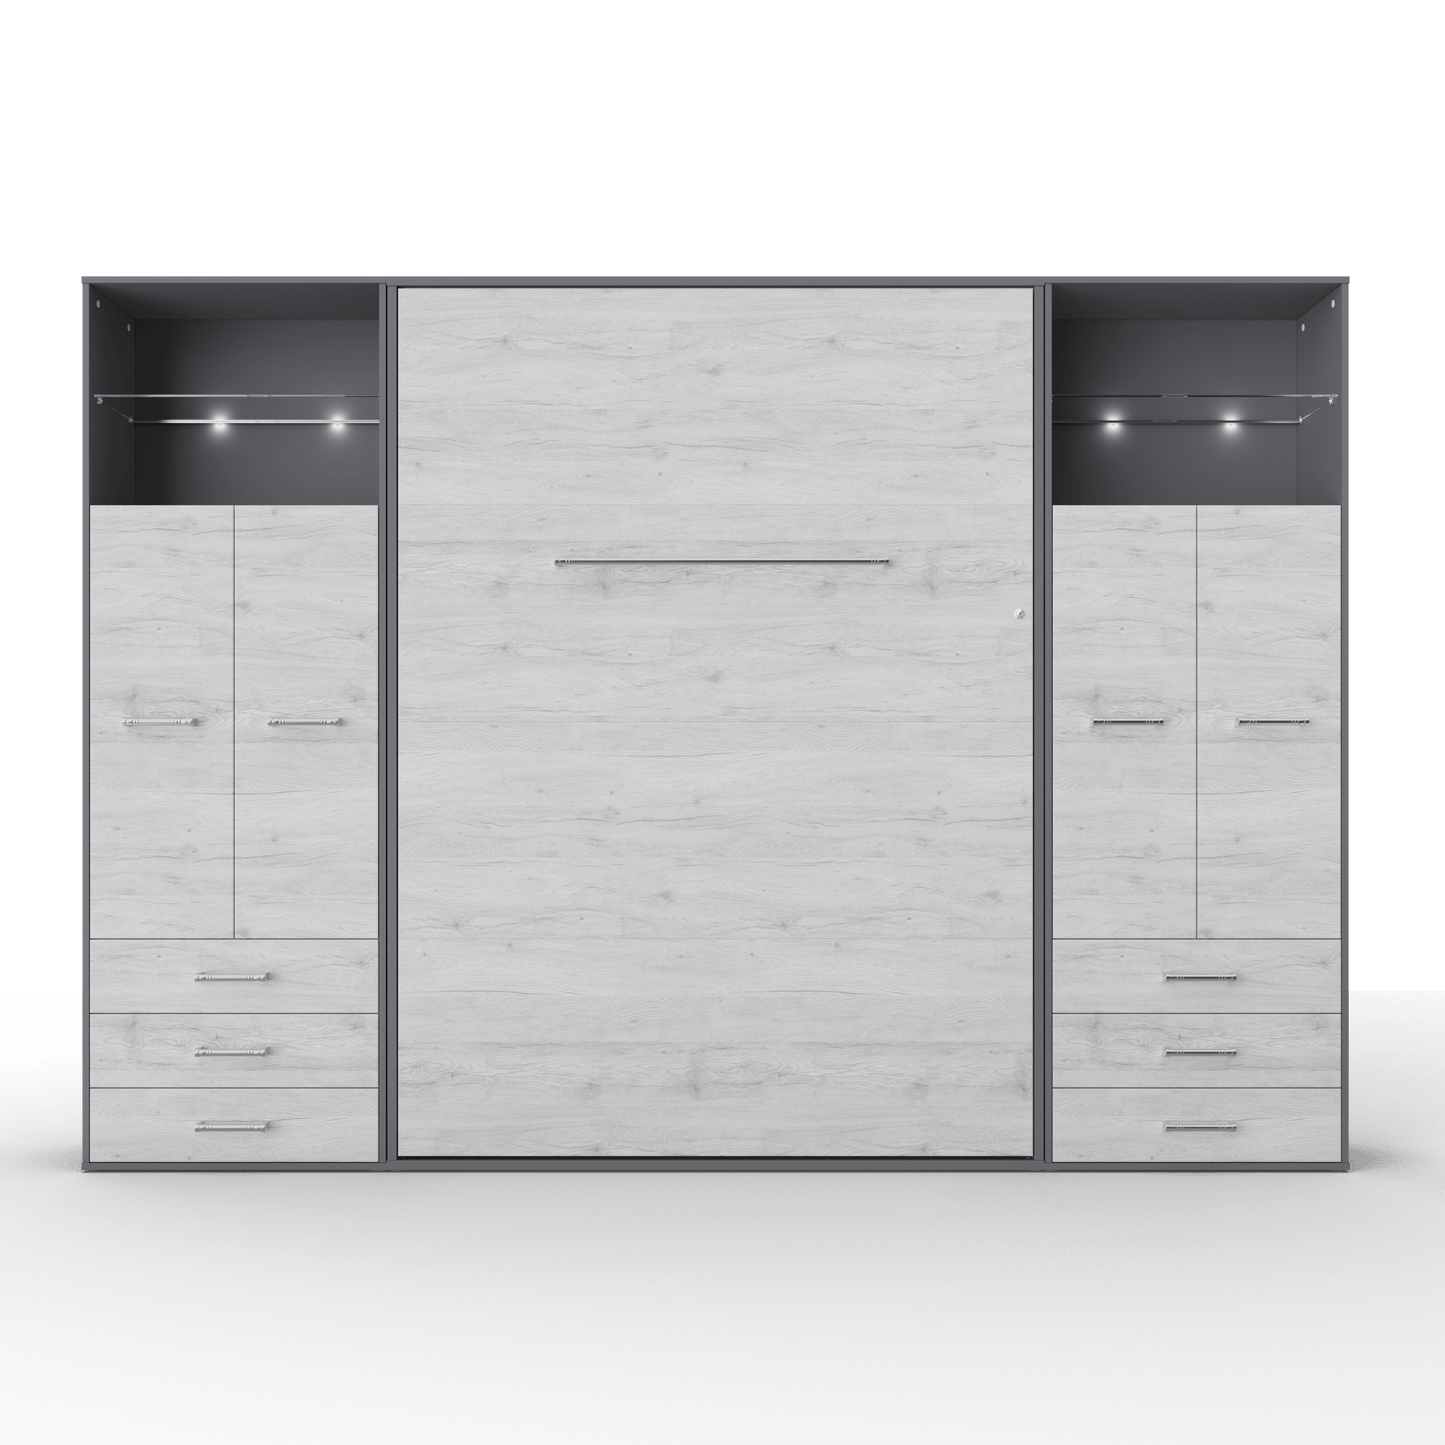 Maxima House Vertical Murphy Bed Invento. European Queen + 2 cabinets Grey/White Monaco IN160V-10GW